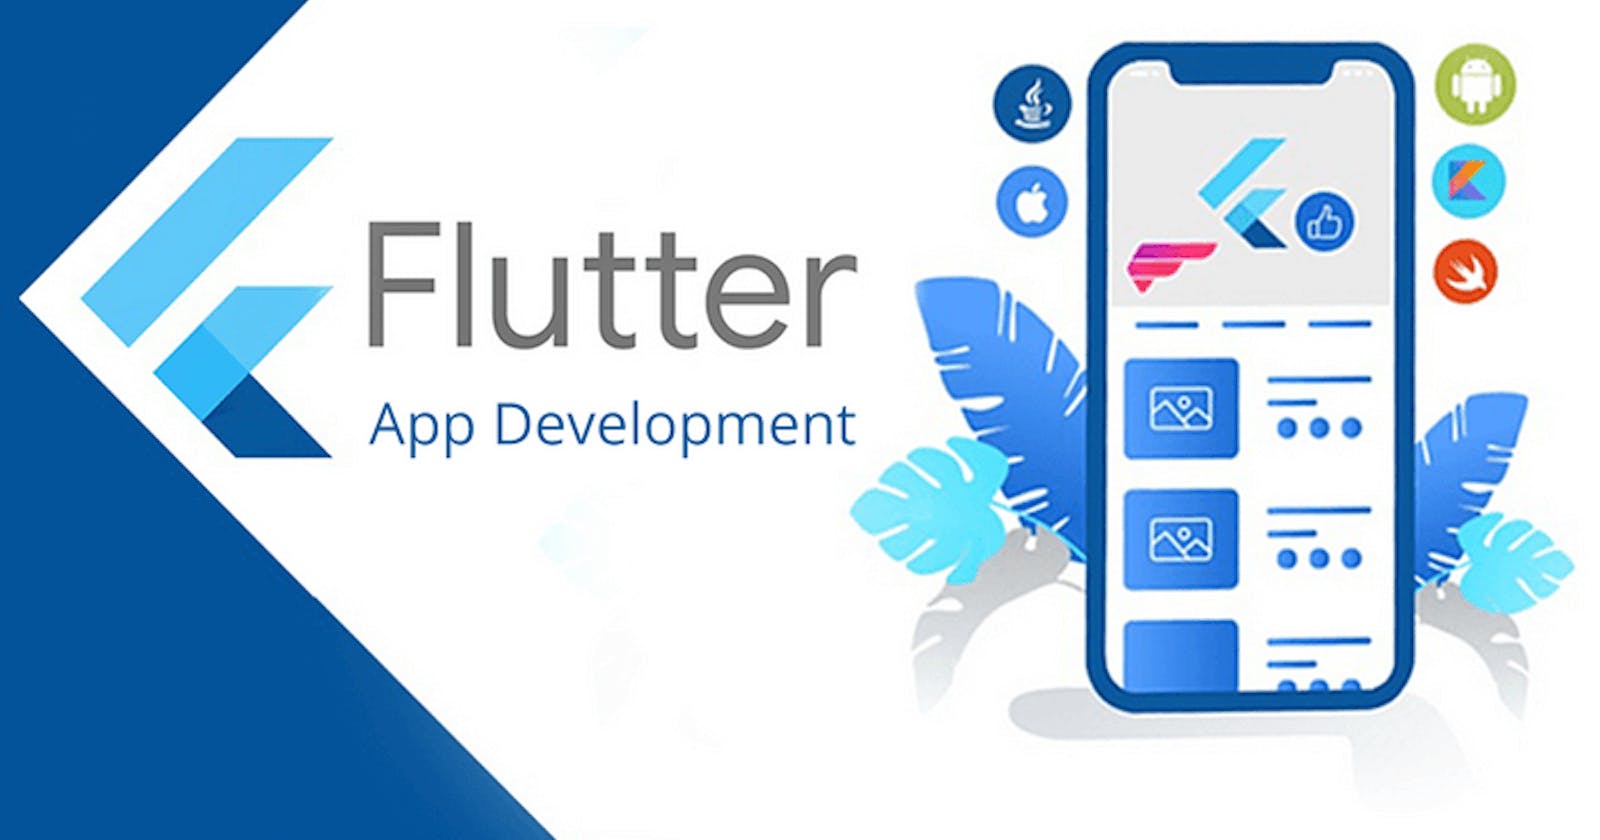 How learning Flutter changed my development career?